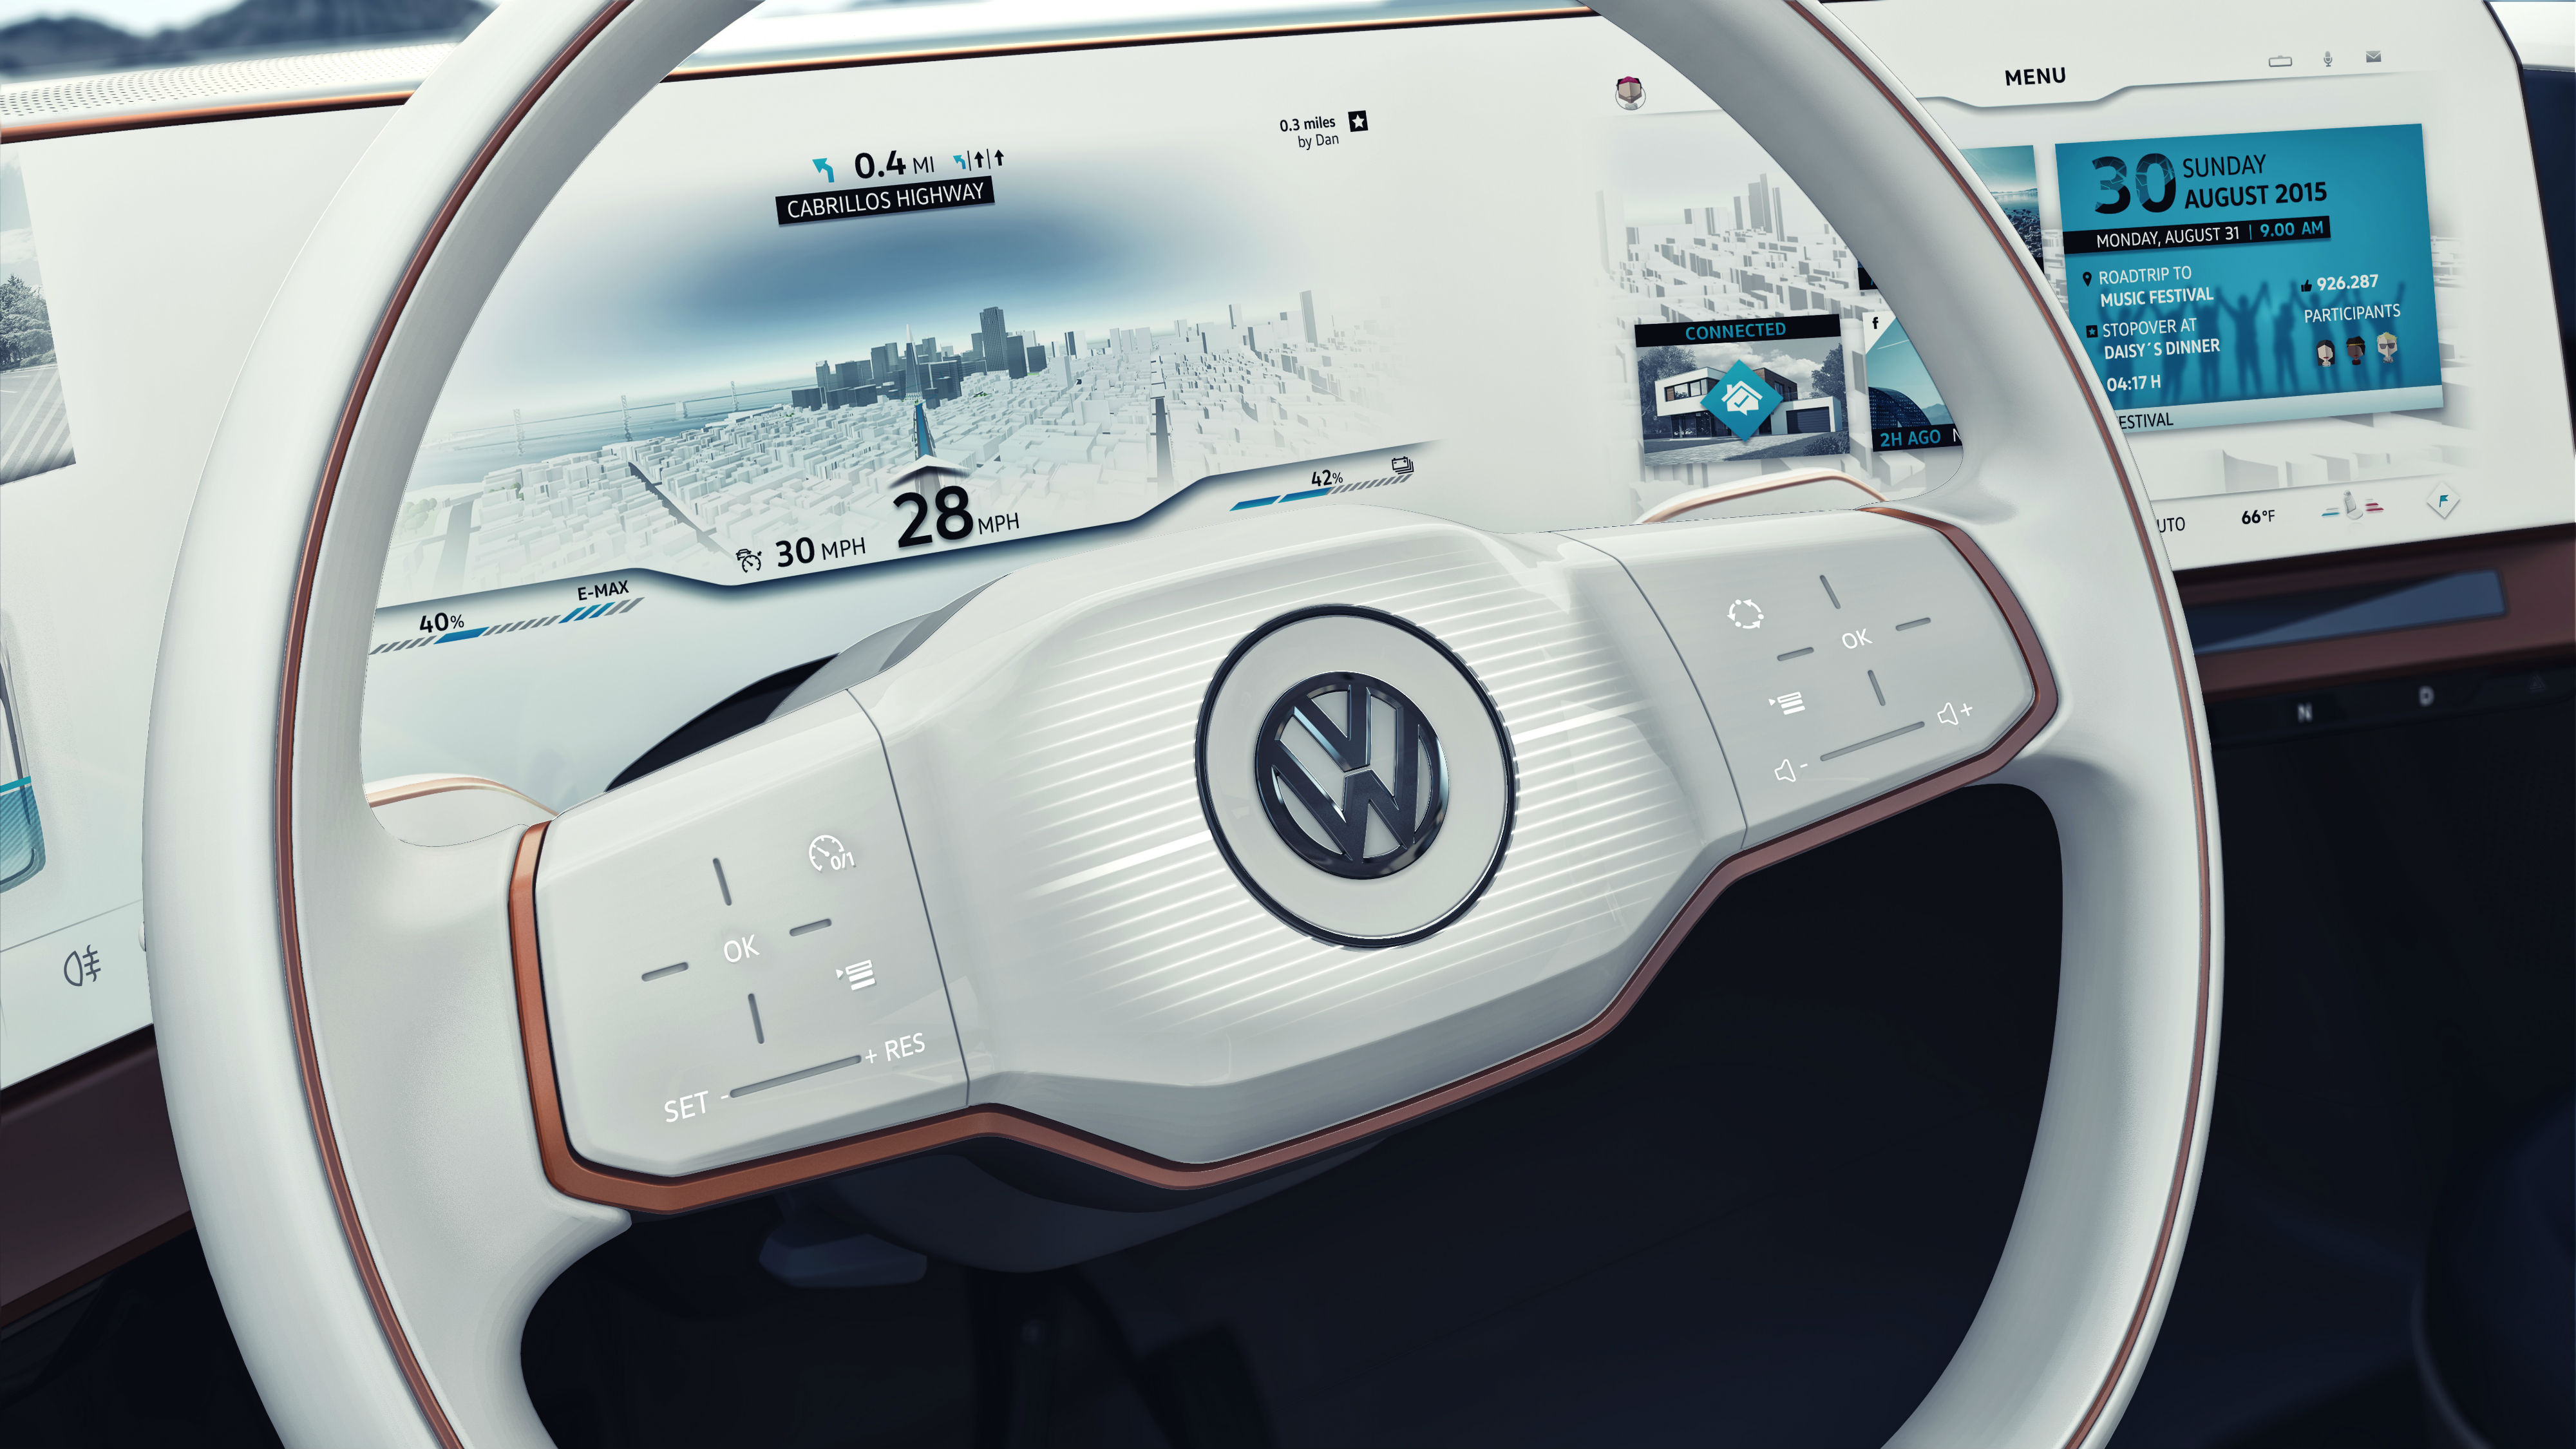 Volkswagen Budd-e concept car at CES 2016 - interior pictures